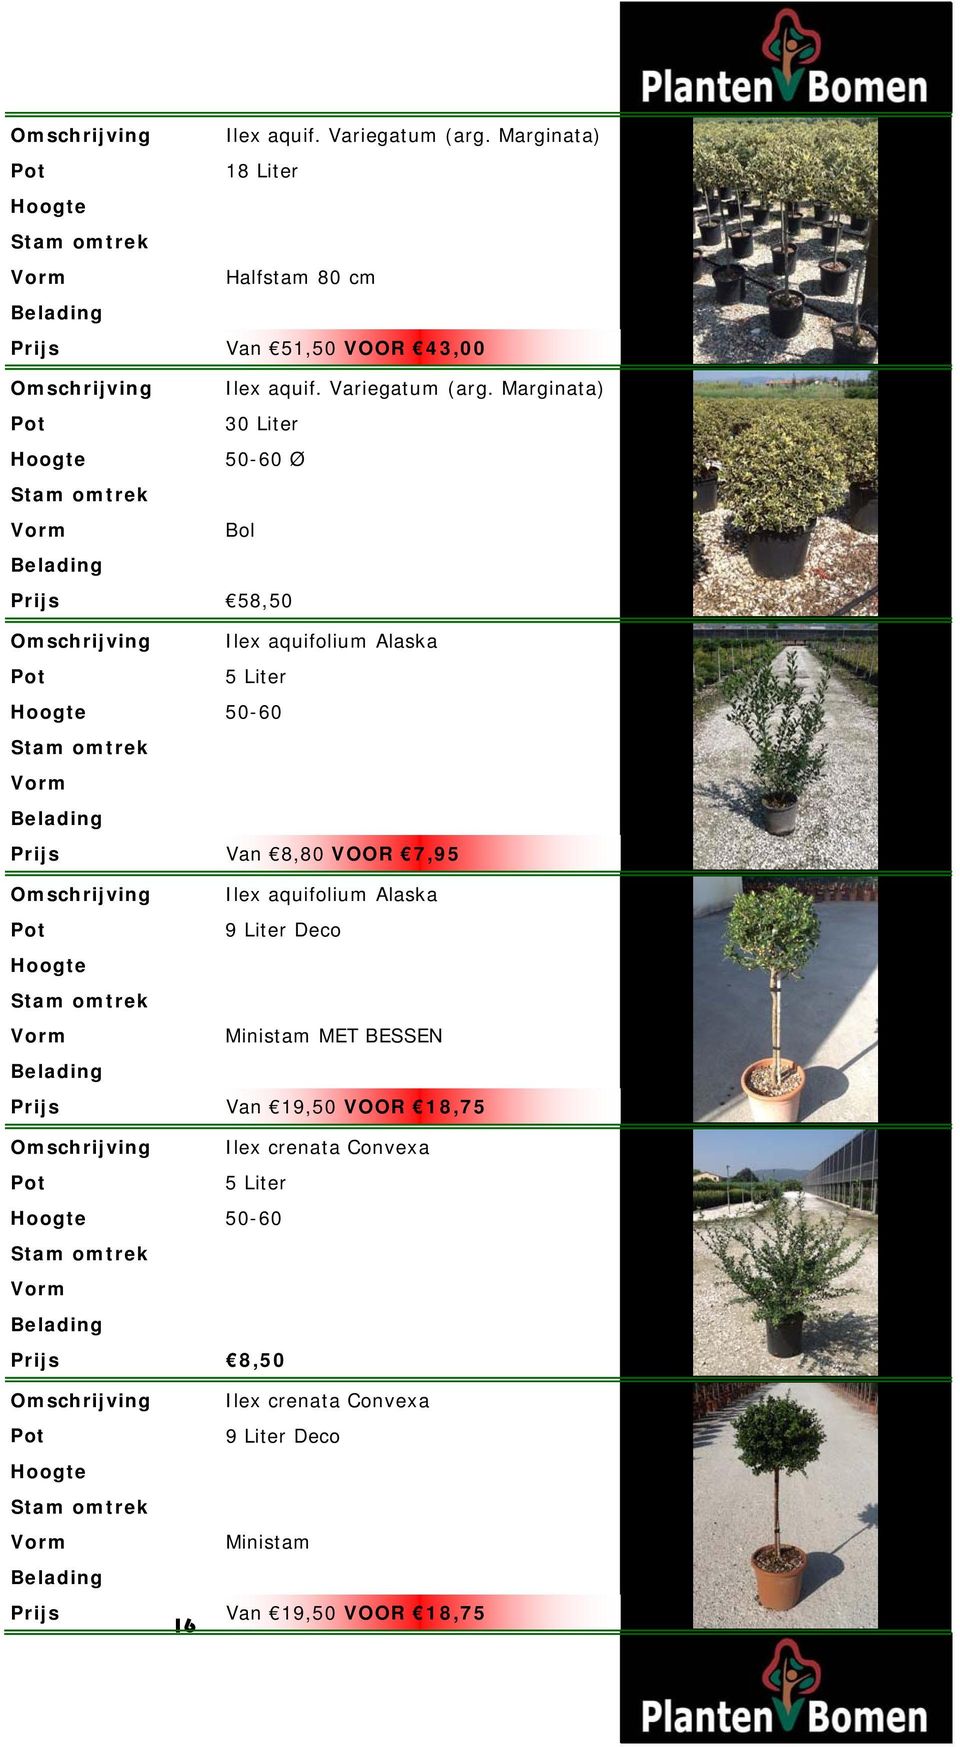 58,50 Ilex aquifolium Alaska 5 Liter 50-60 Van 8,80 VOOR 7,95 Ilex aquifolium Alaska